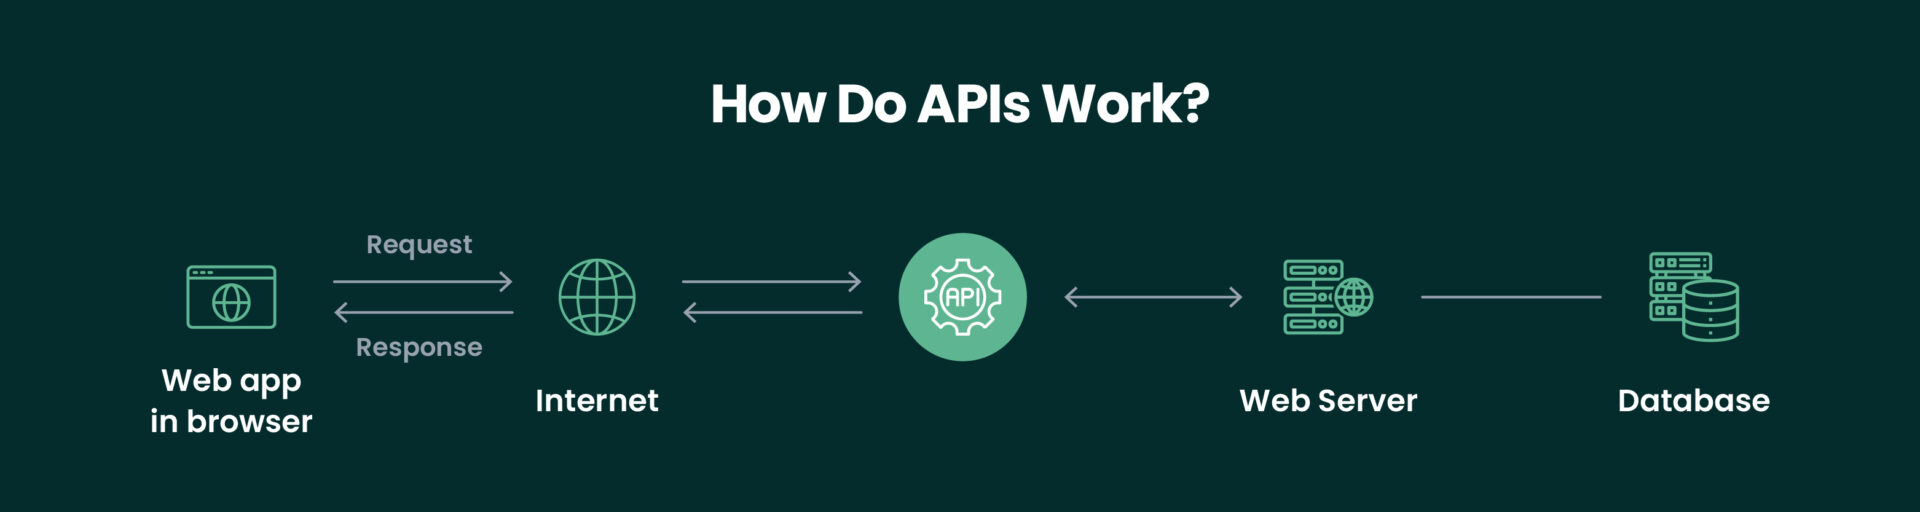 How Do APIs Work?